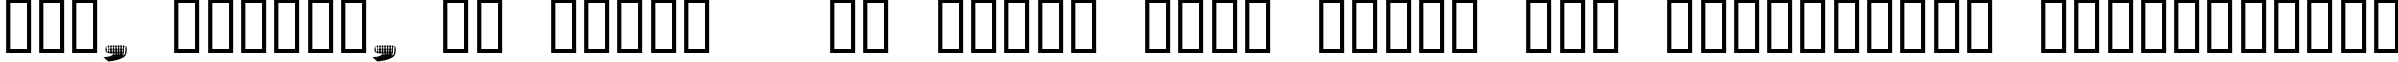 Пример написания шрифтом Philtered Phont текста на украинском